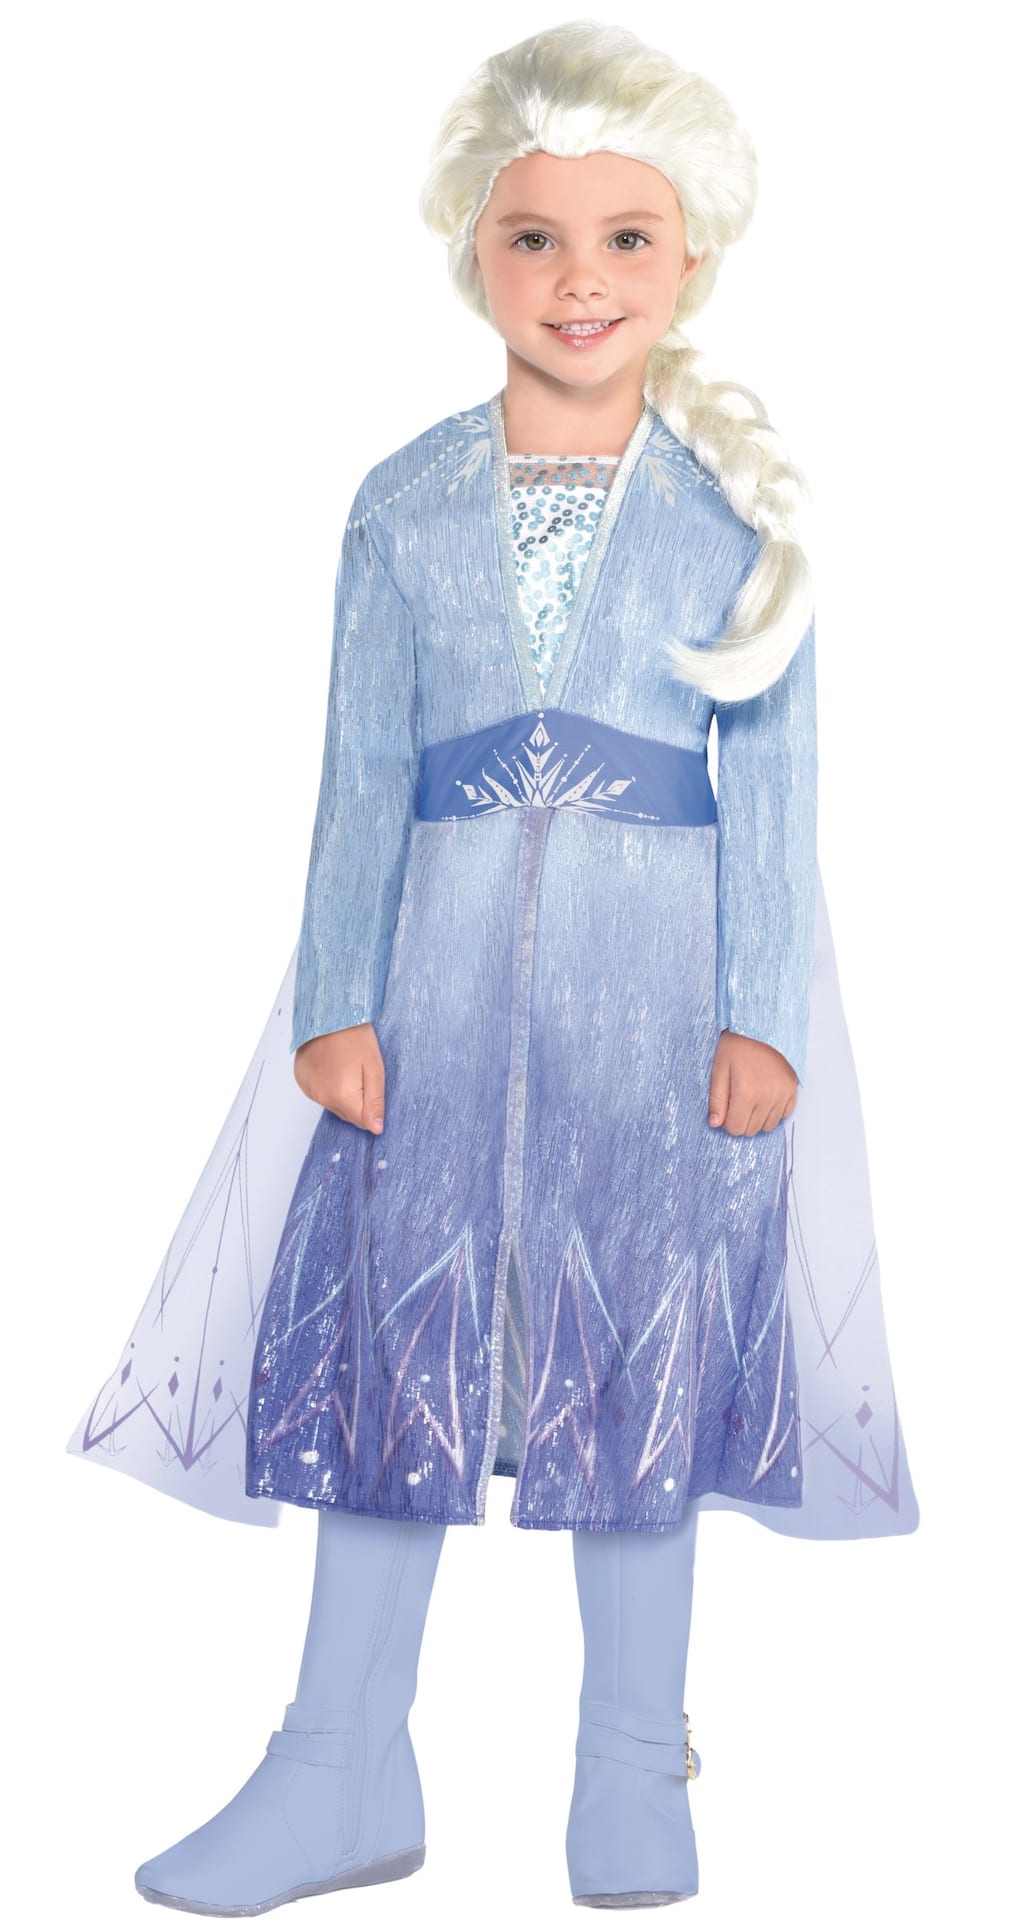 Robe Elsa reine des neiges, robes de princesse costume d'Halloween